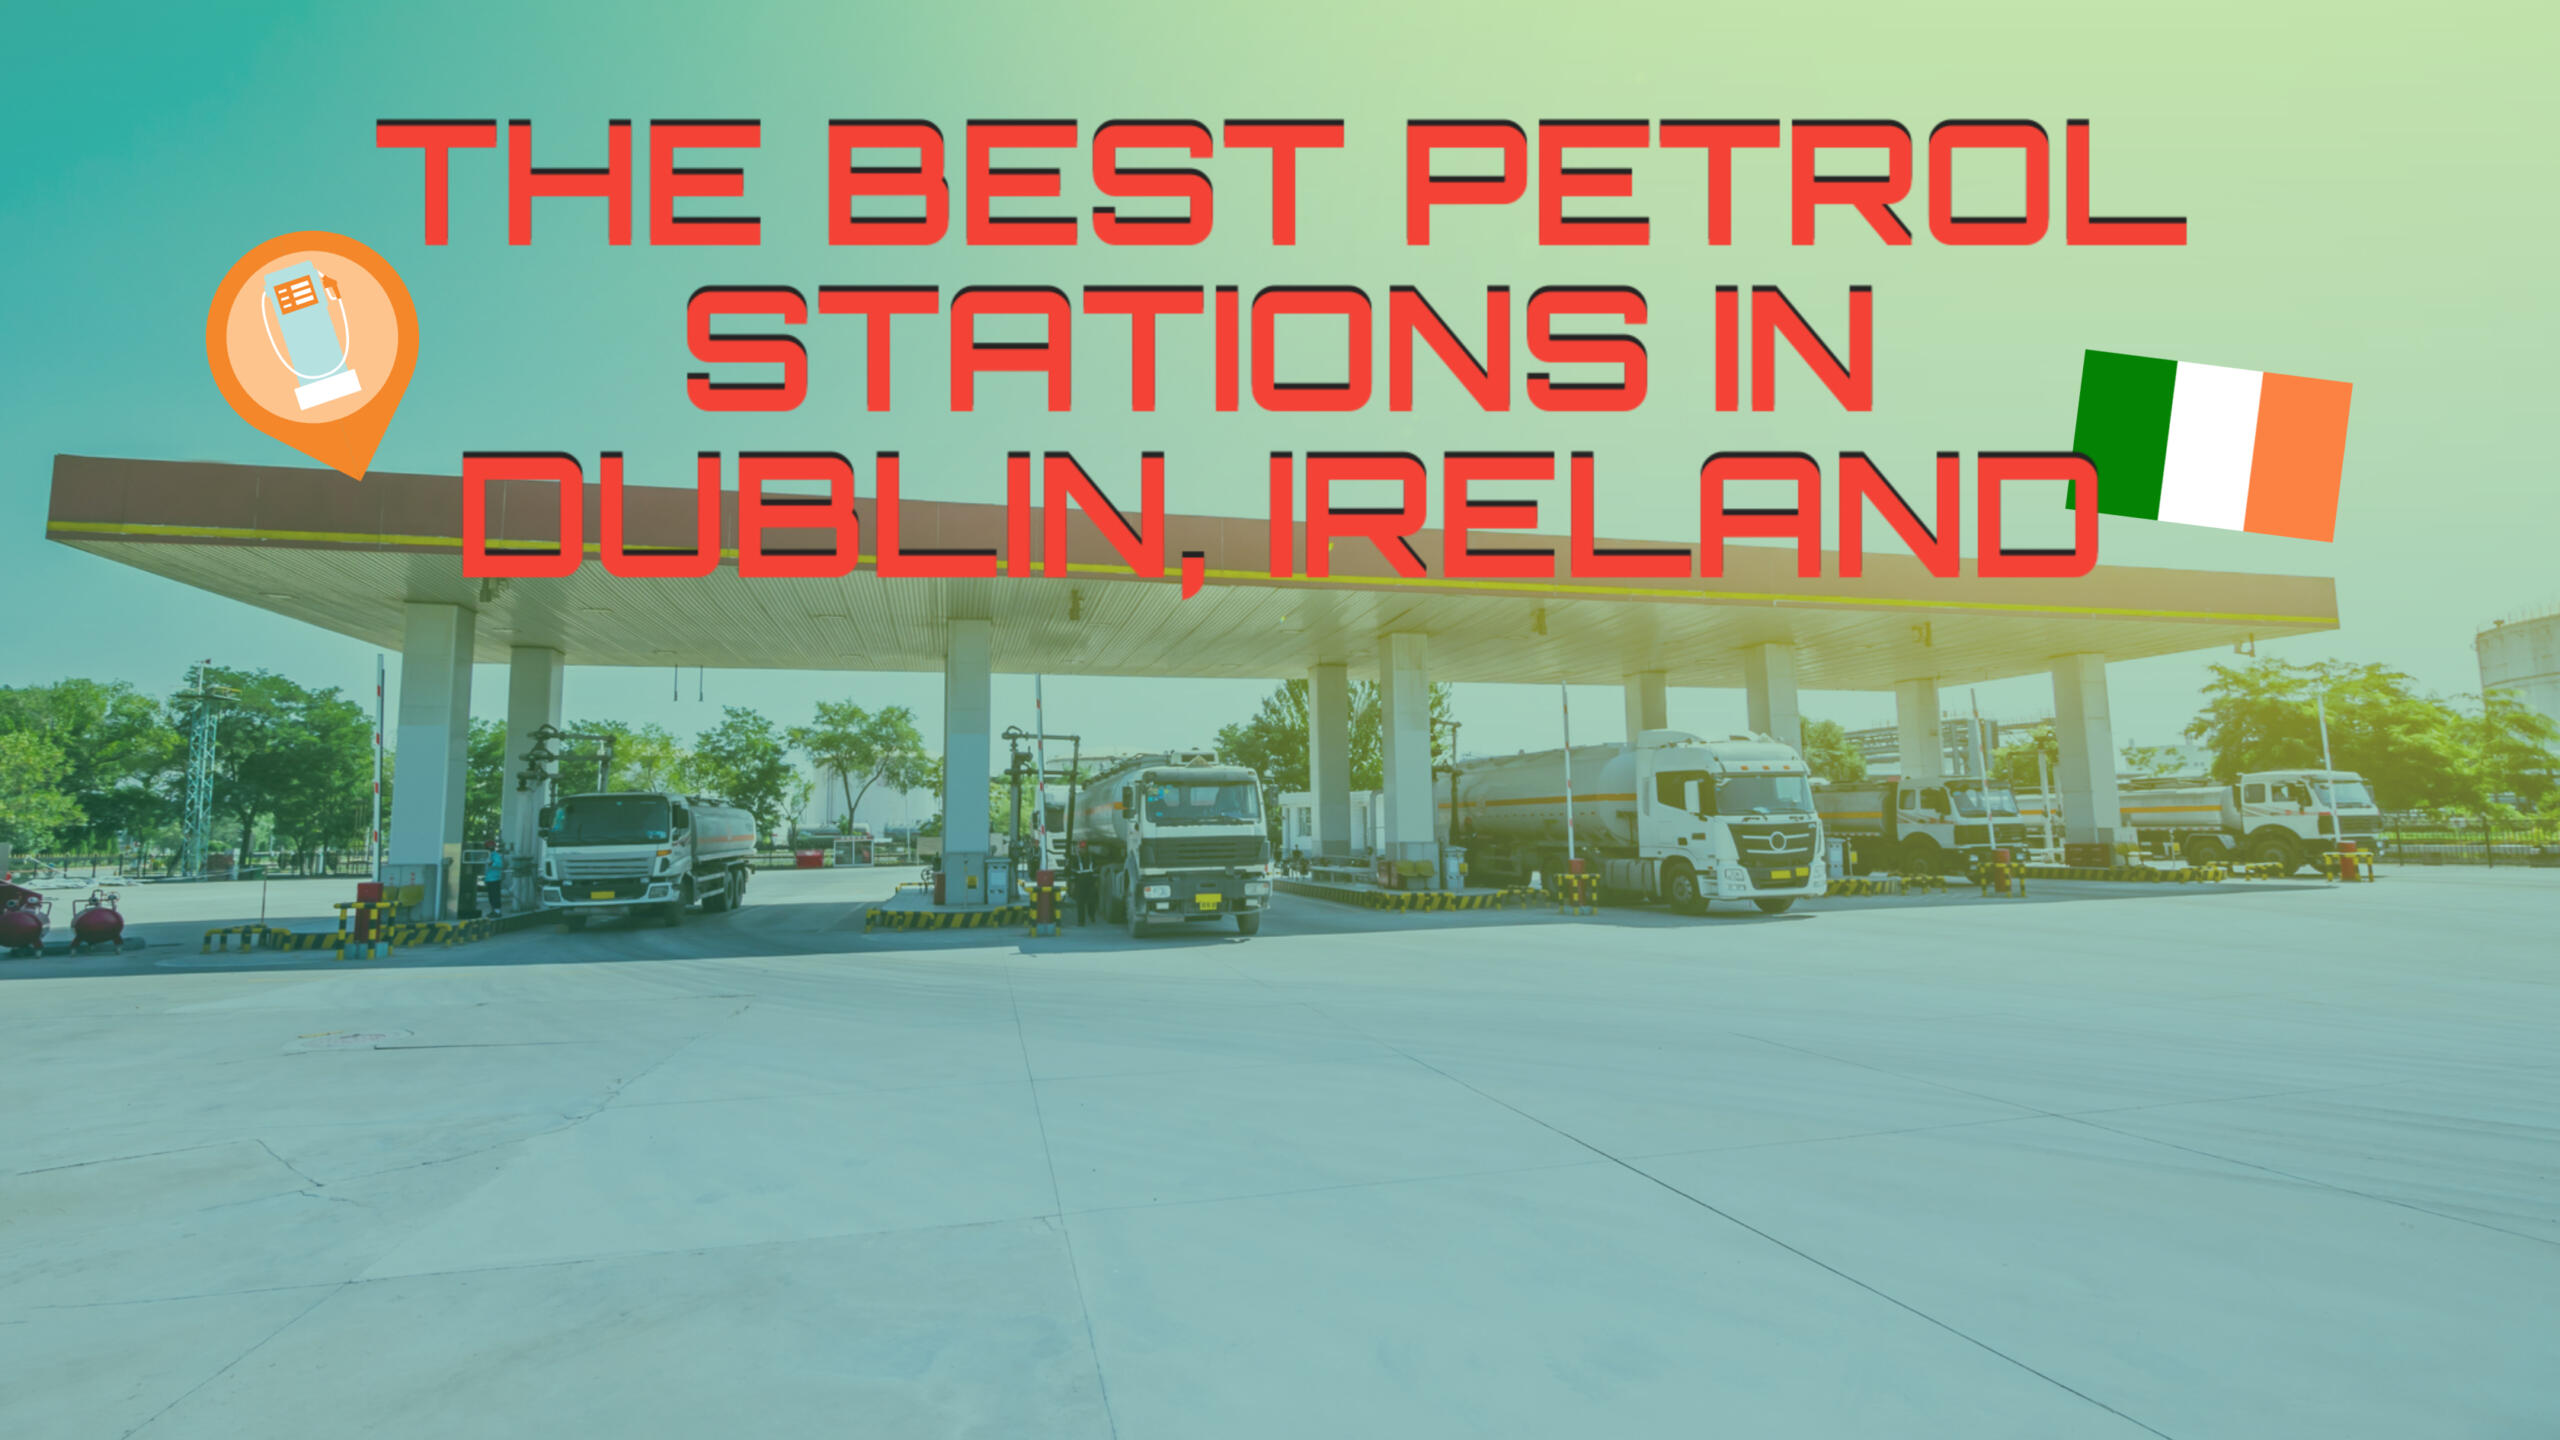 Petrol Stations Near Dublin, Ireland